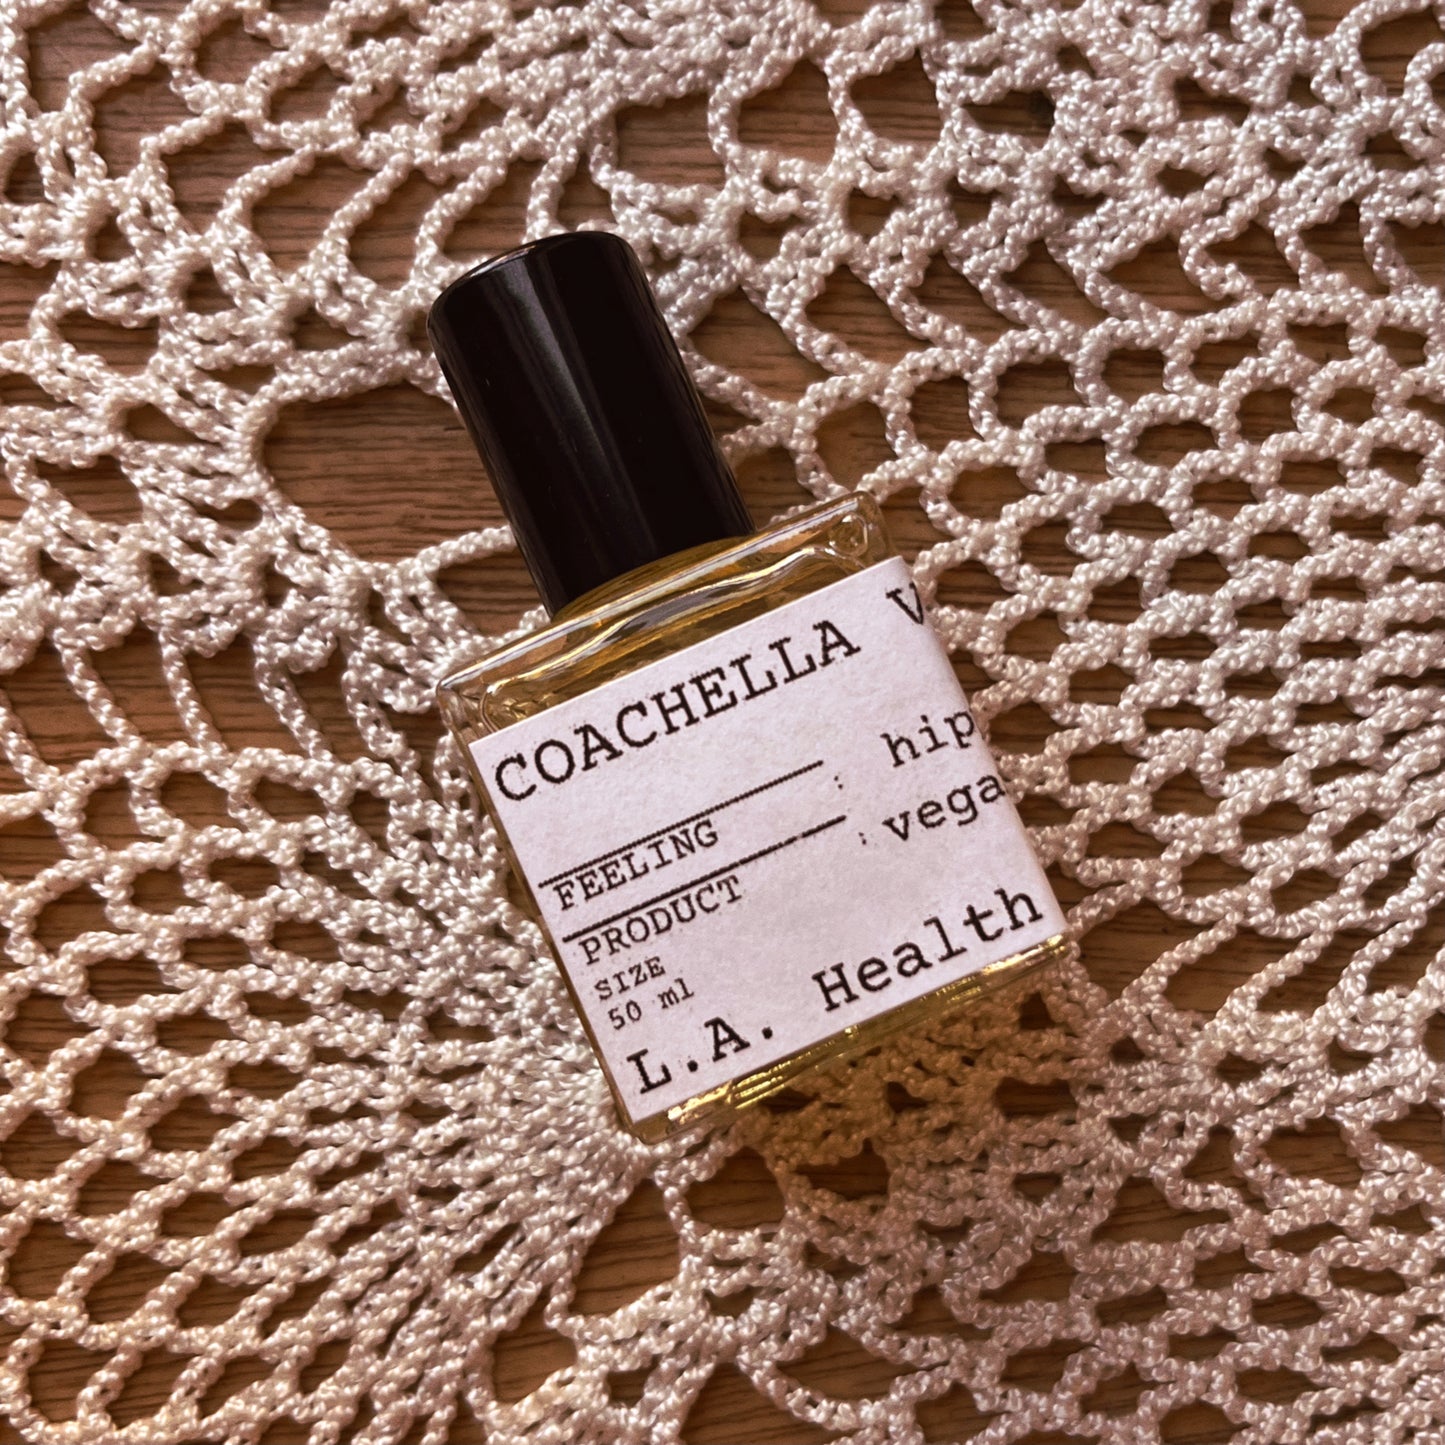 Perfume | Cochella Valley